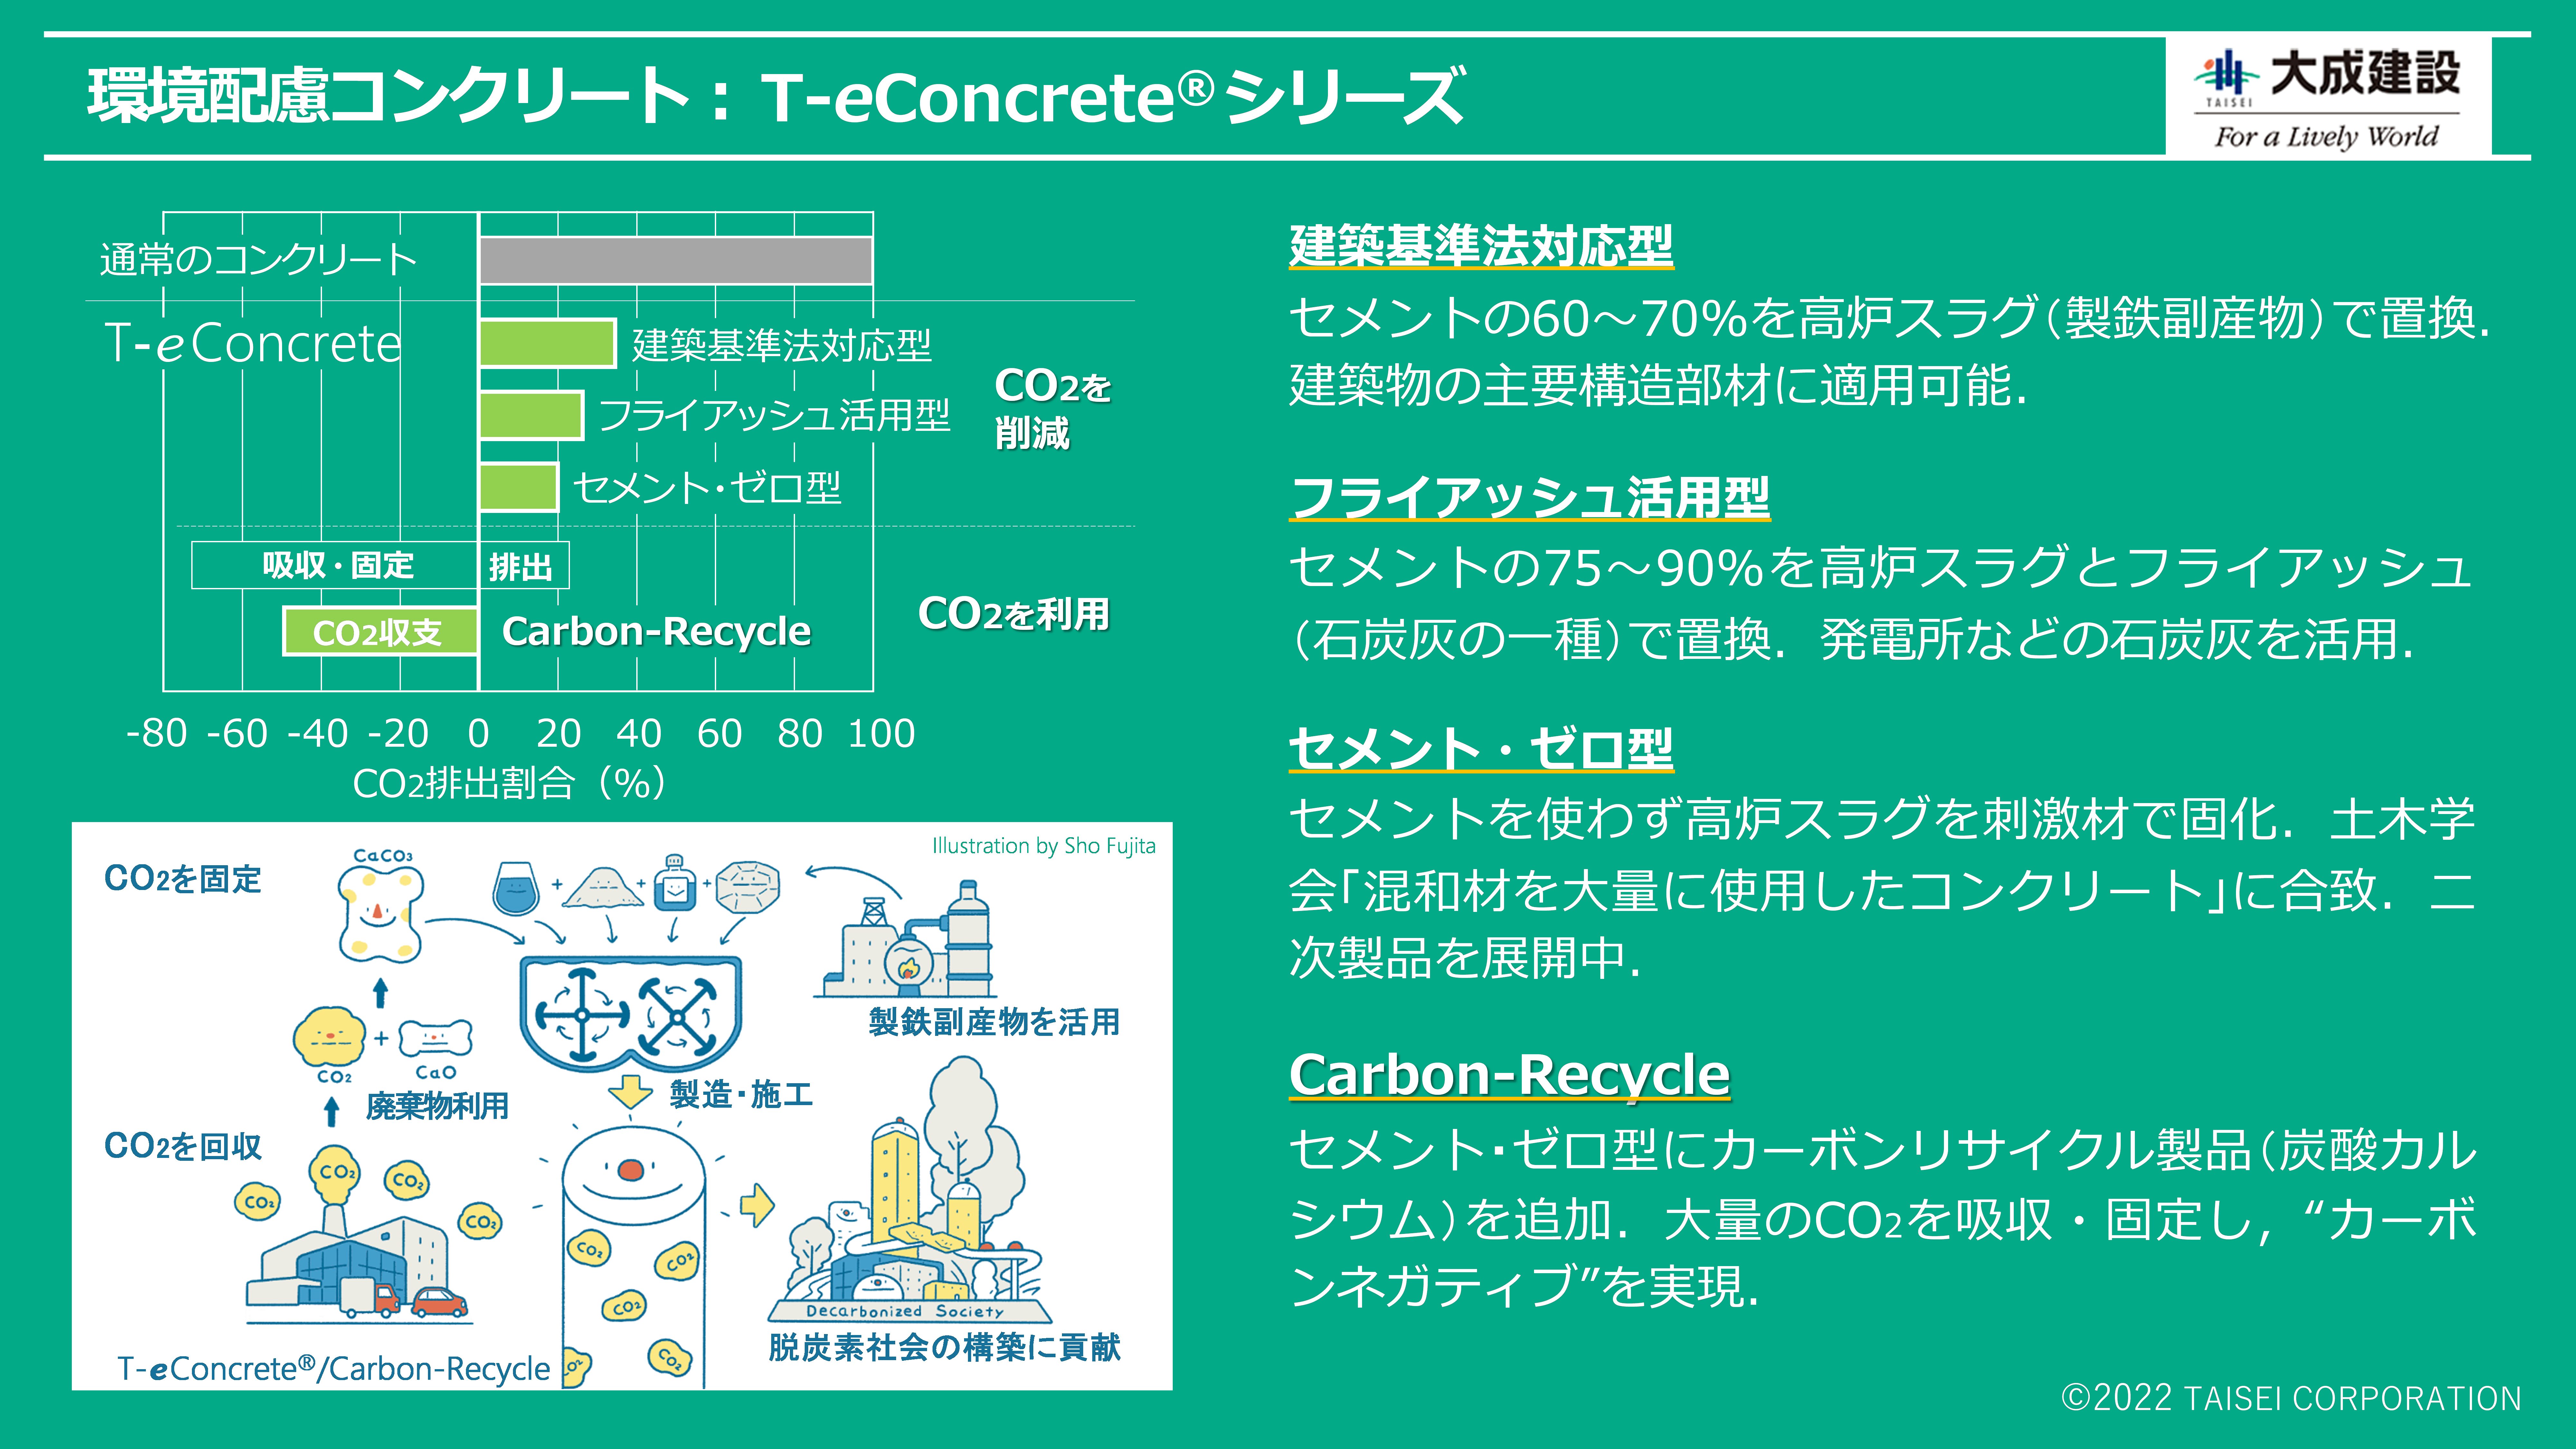 T-eConcreteシリーズの構成と特徴